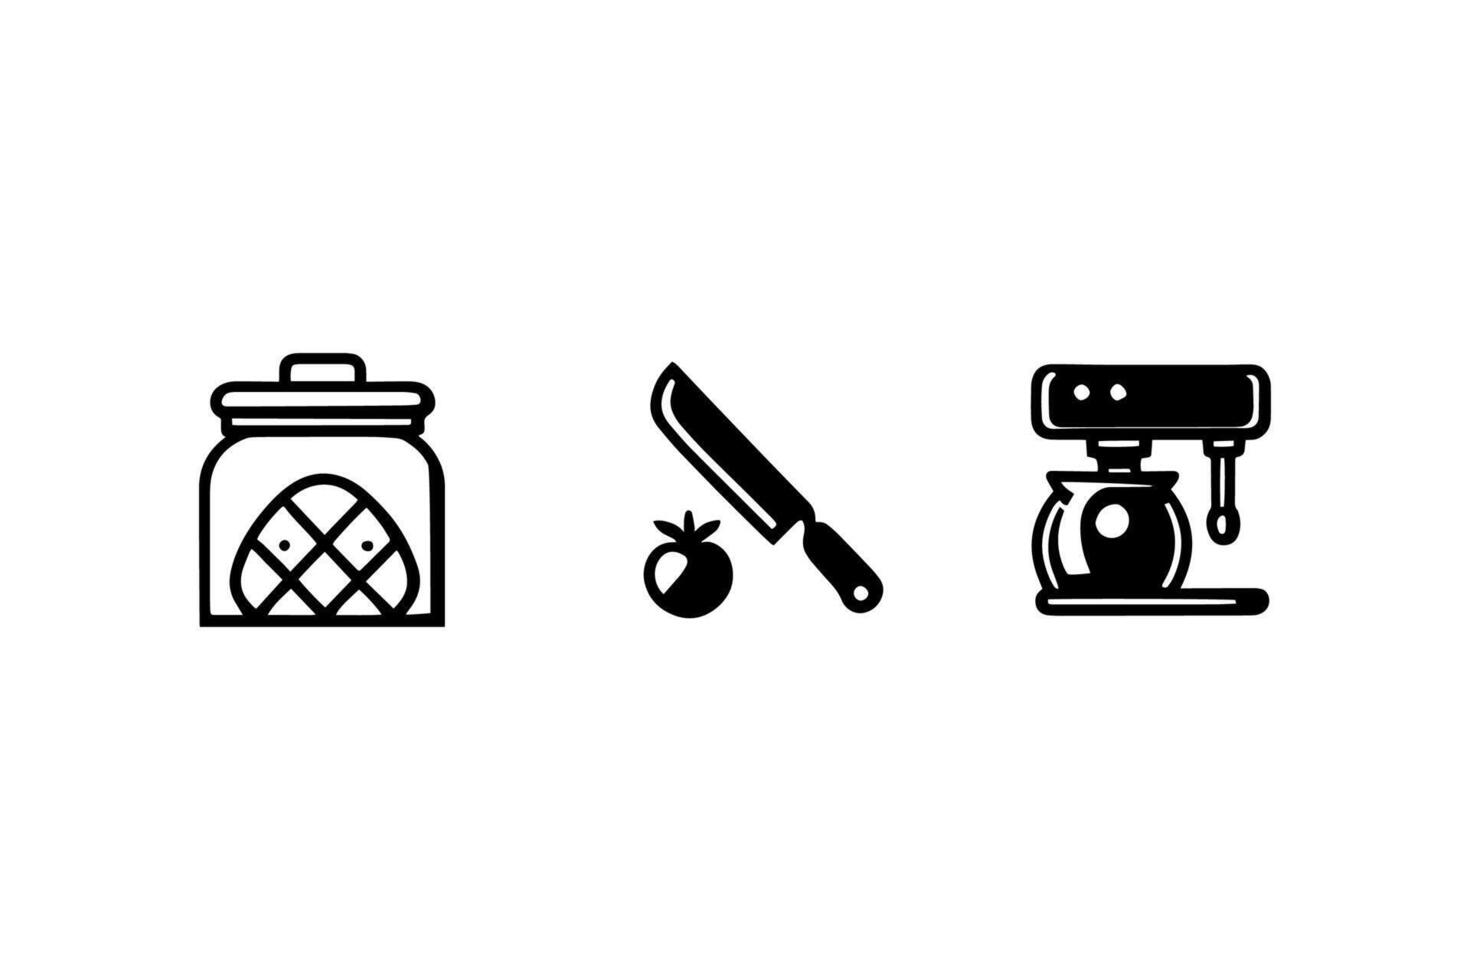 Küche-Icon-Pack vektor